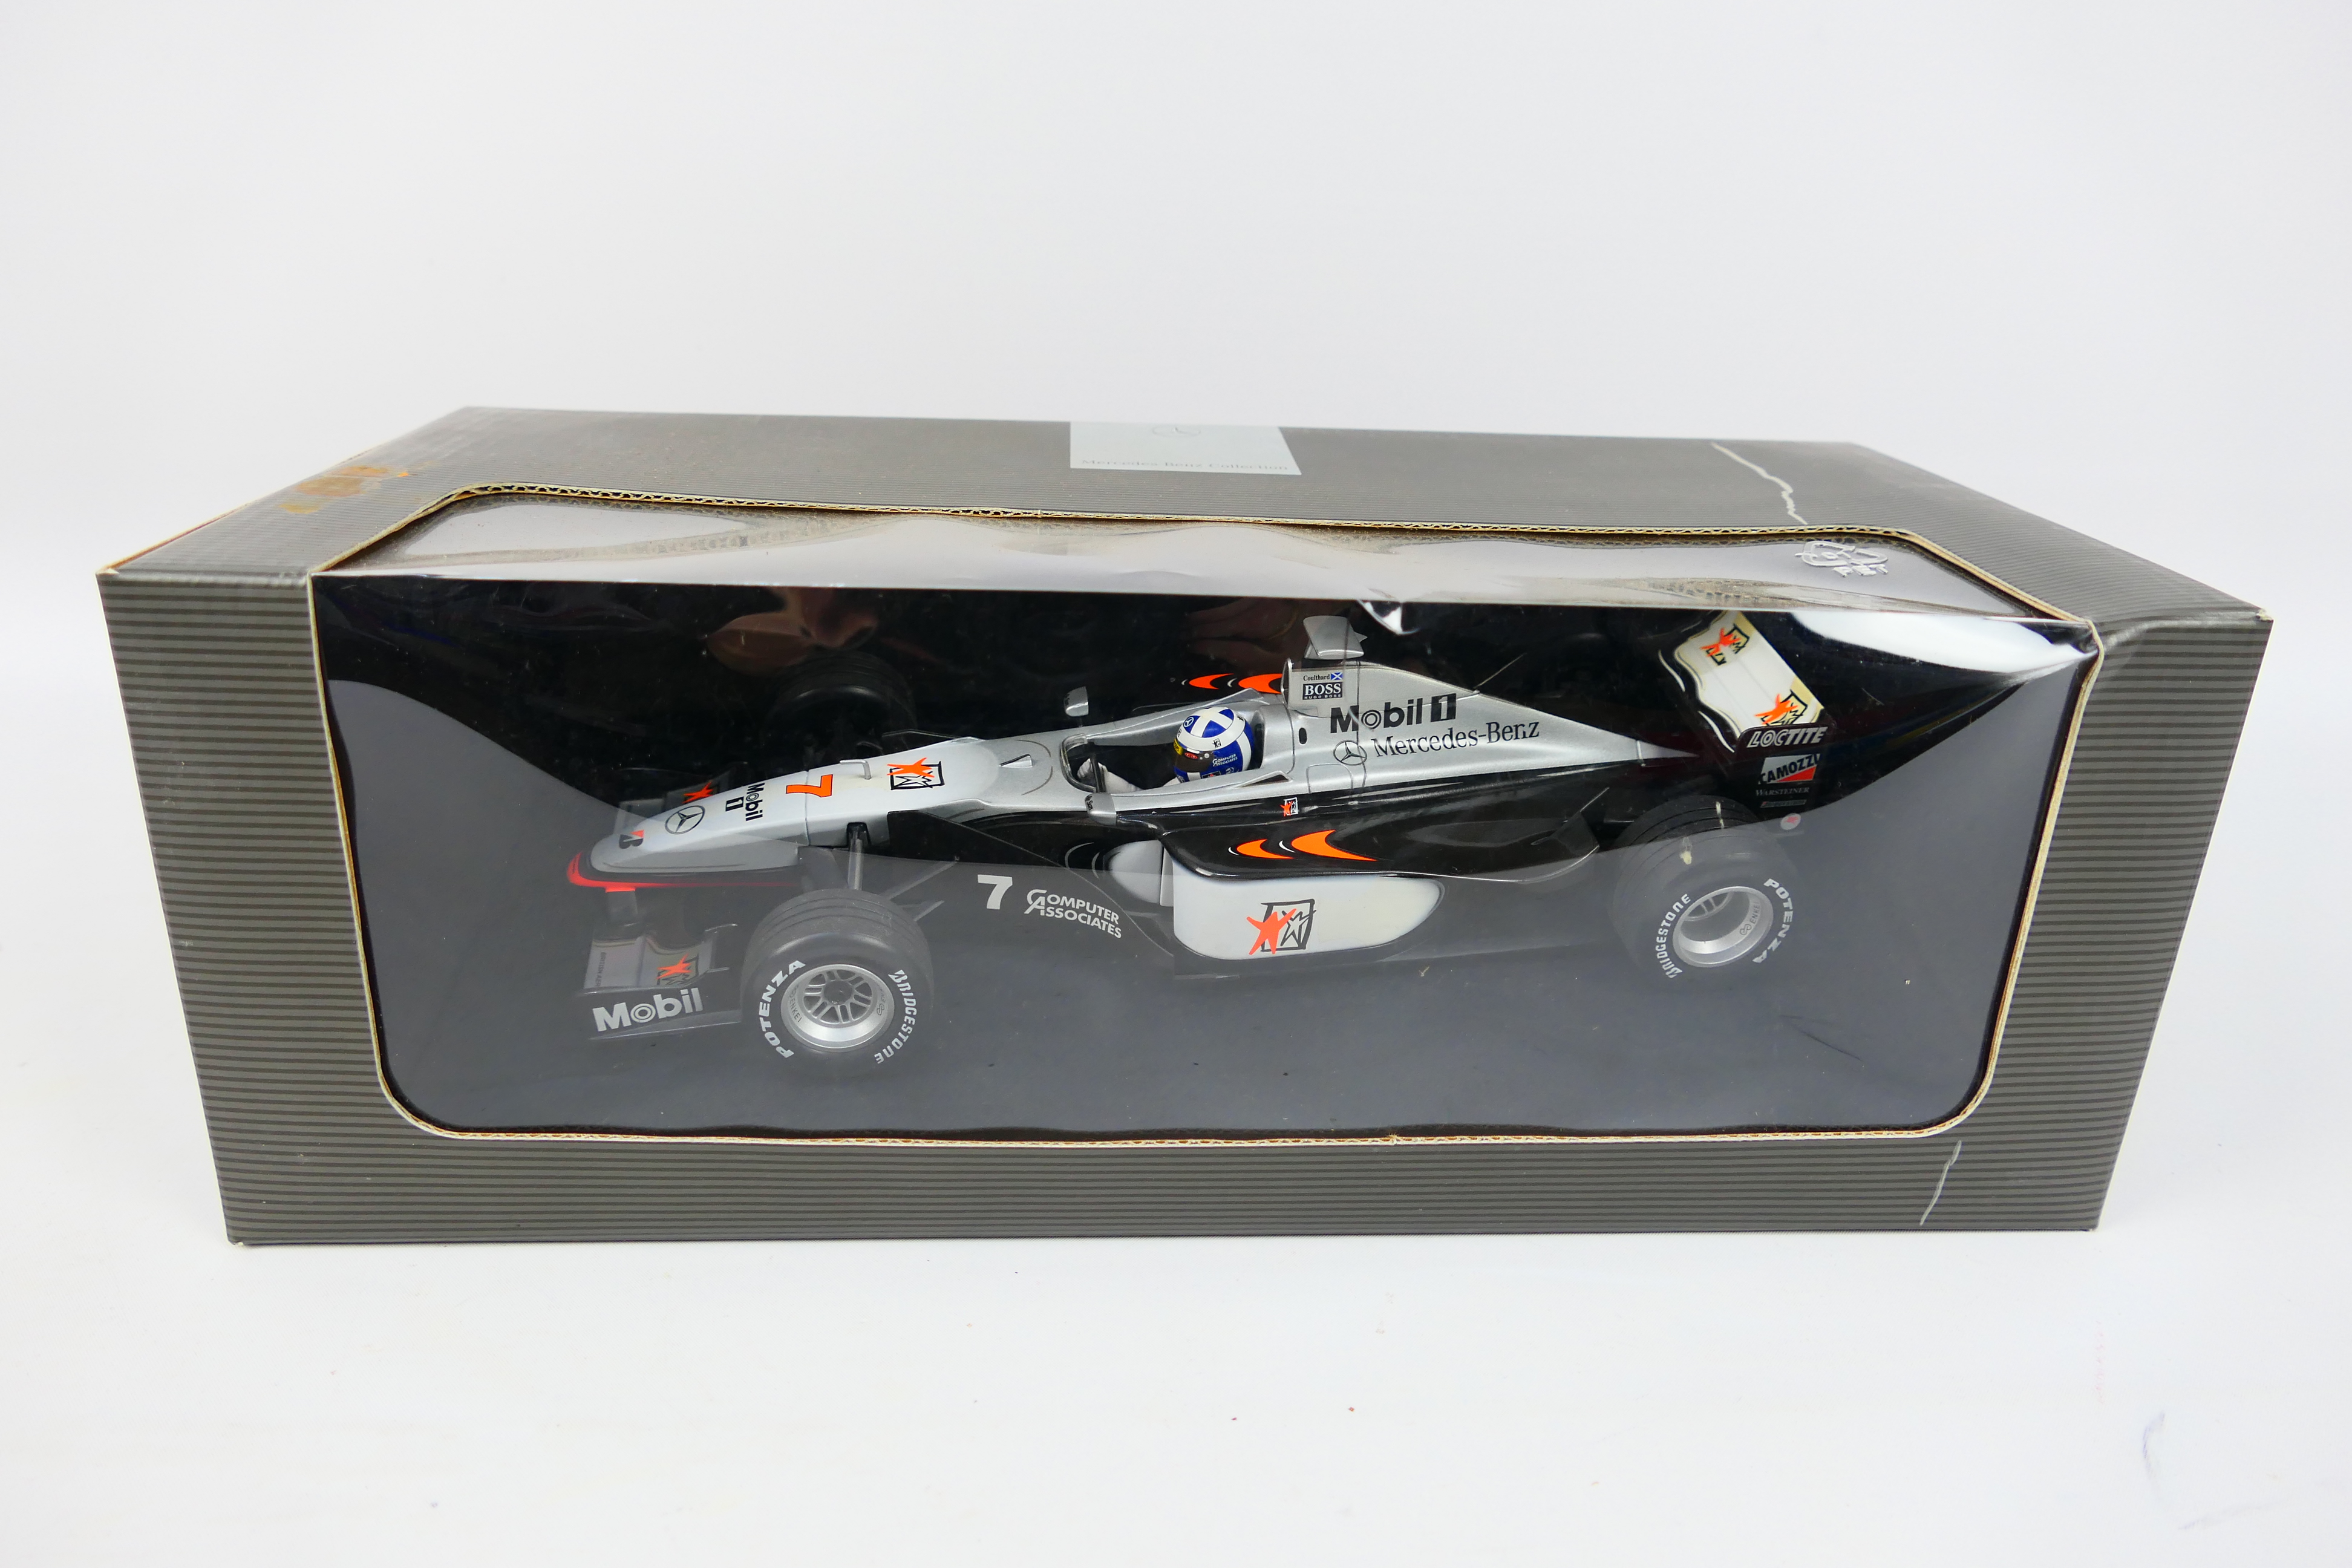 Minichamps - A boxed 1:18 scale Minichamps B6 6960220 diecast McLaren Mercedes F1 Racing Car, - Image 2 of 12